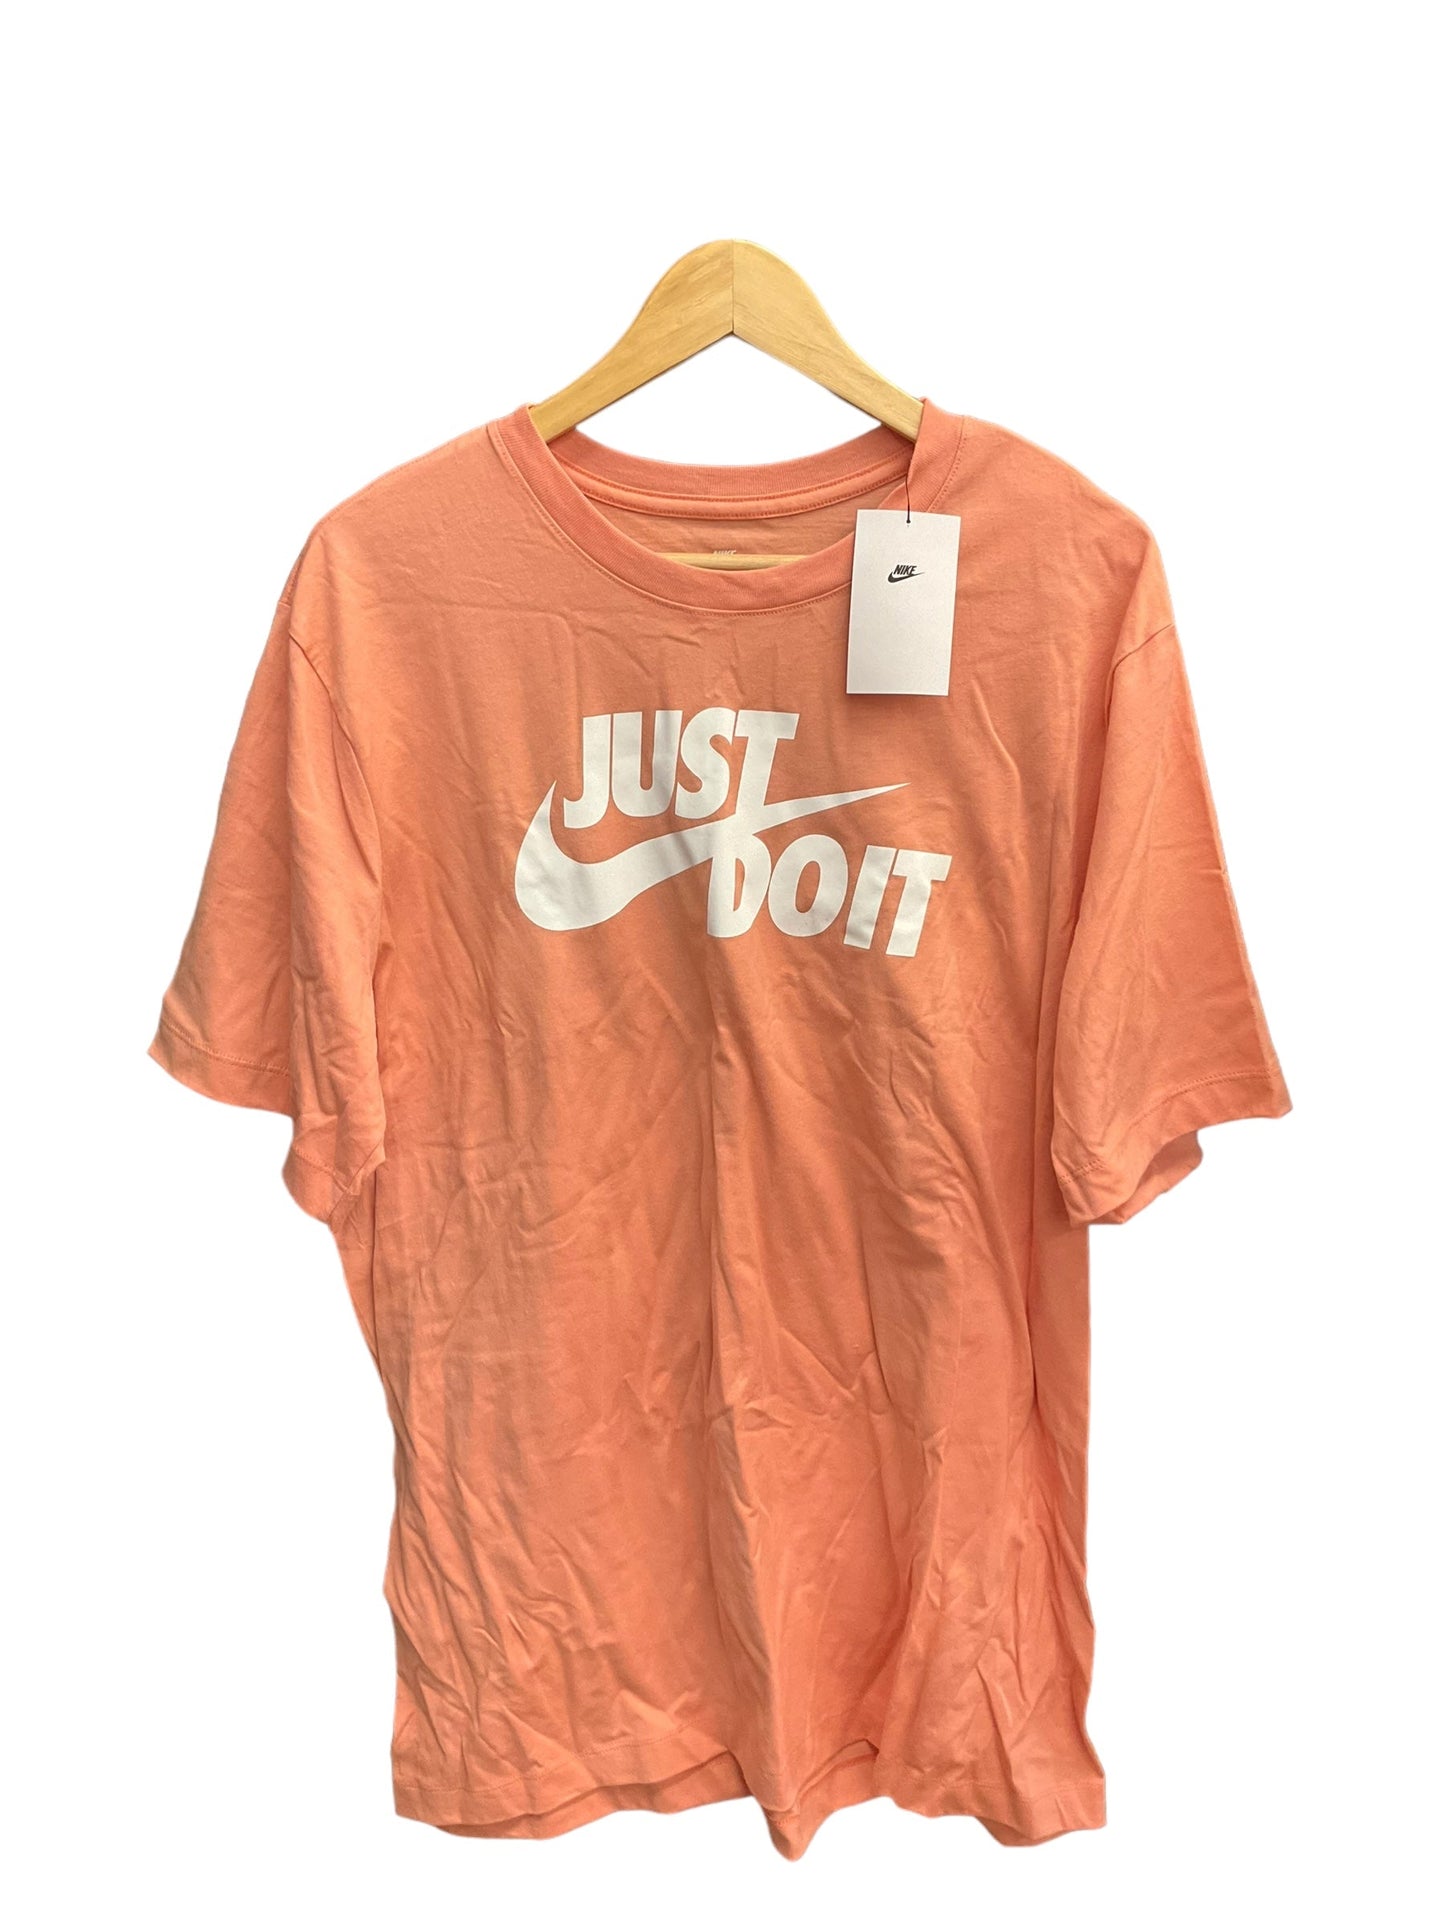 Orange Athletic Top Short Sleeve Nike Apparel, Size Xl